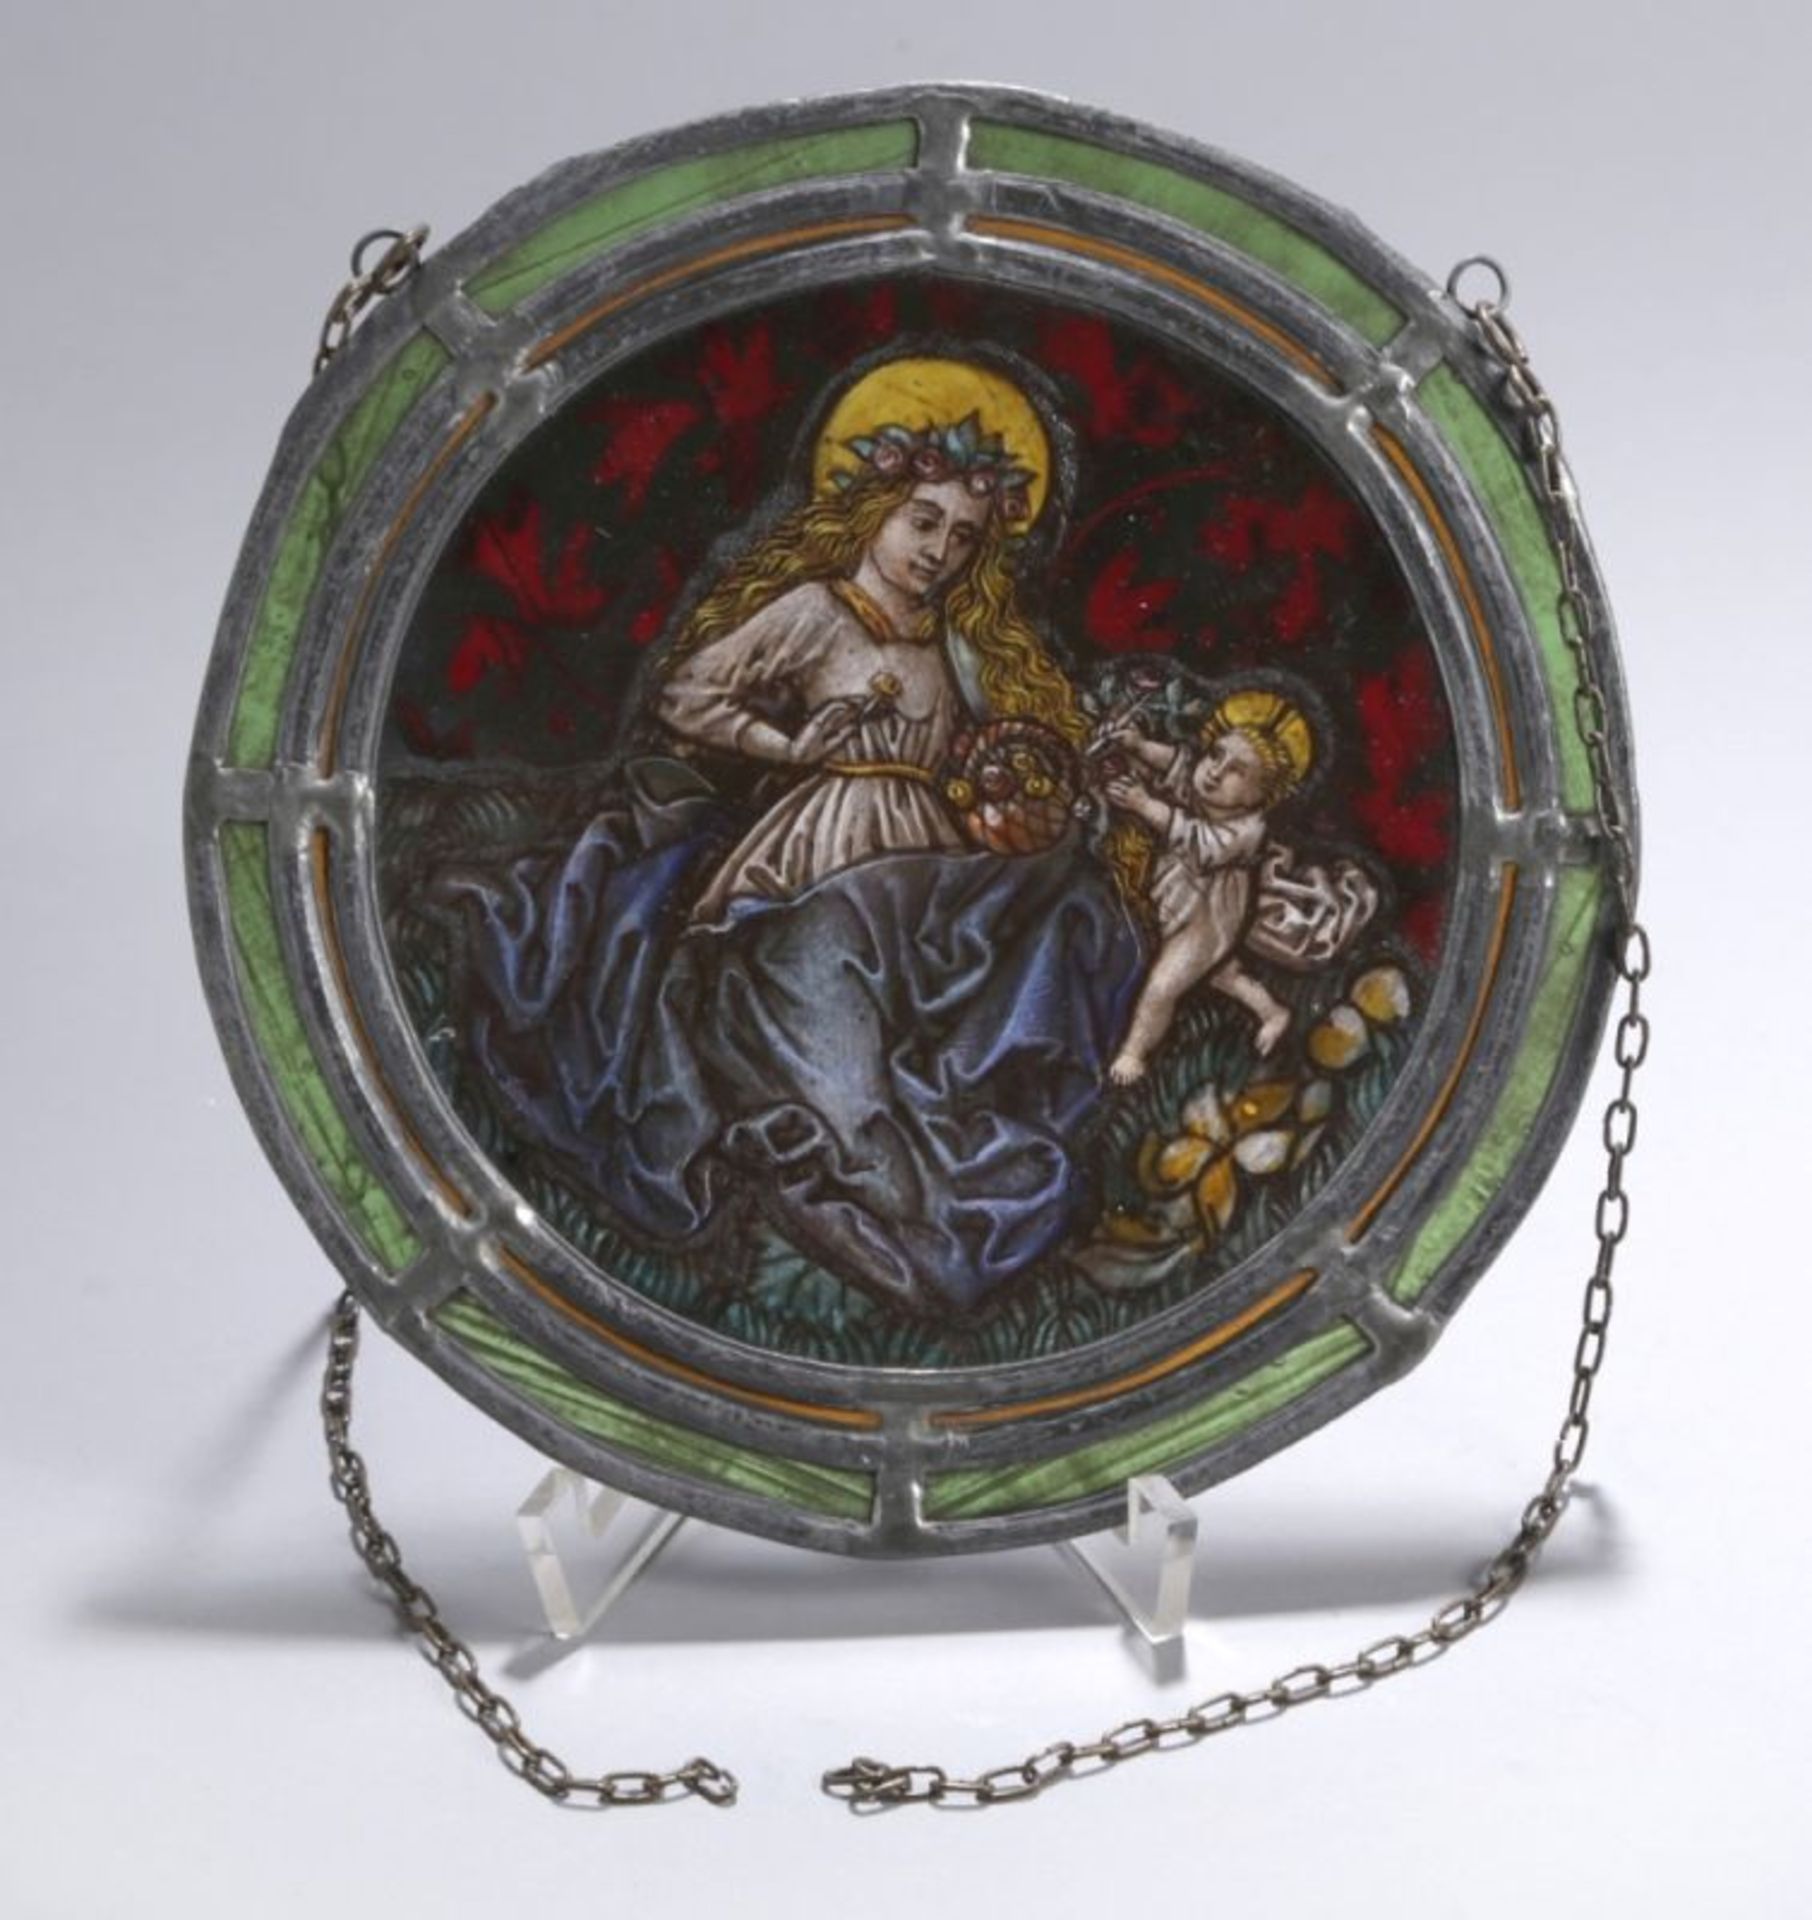 Bleiverglasung, 19. Jh., rund, mythologische Figurenszene, polychrom, D 17,5 cm